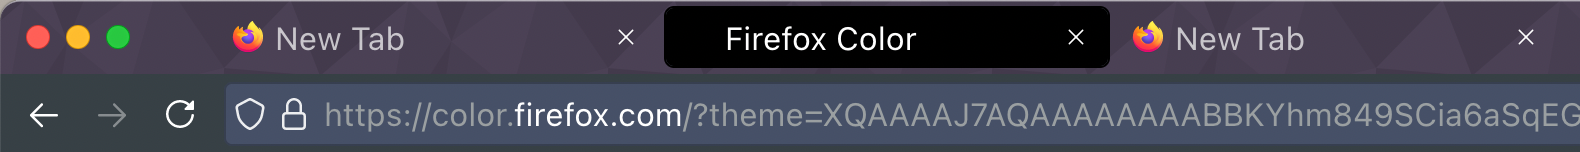 Firefox 89 tab appearance